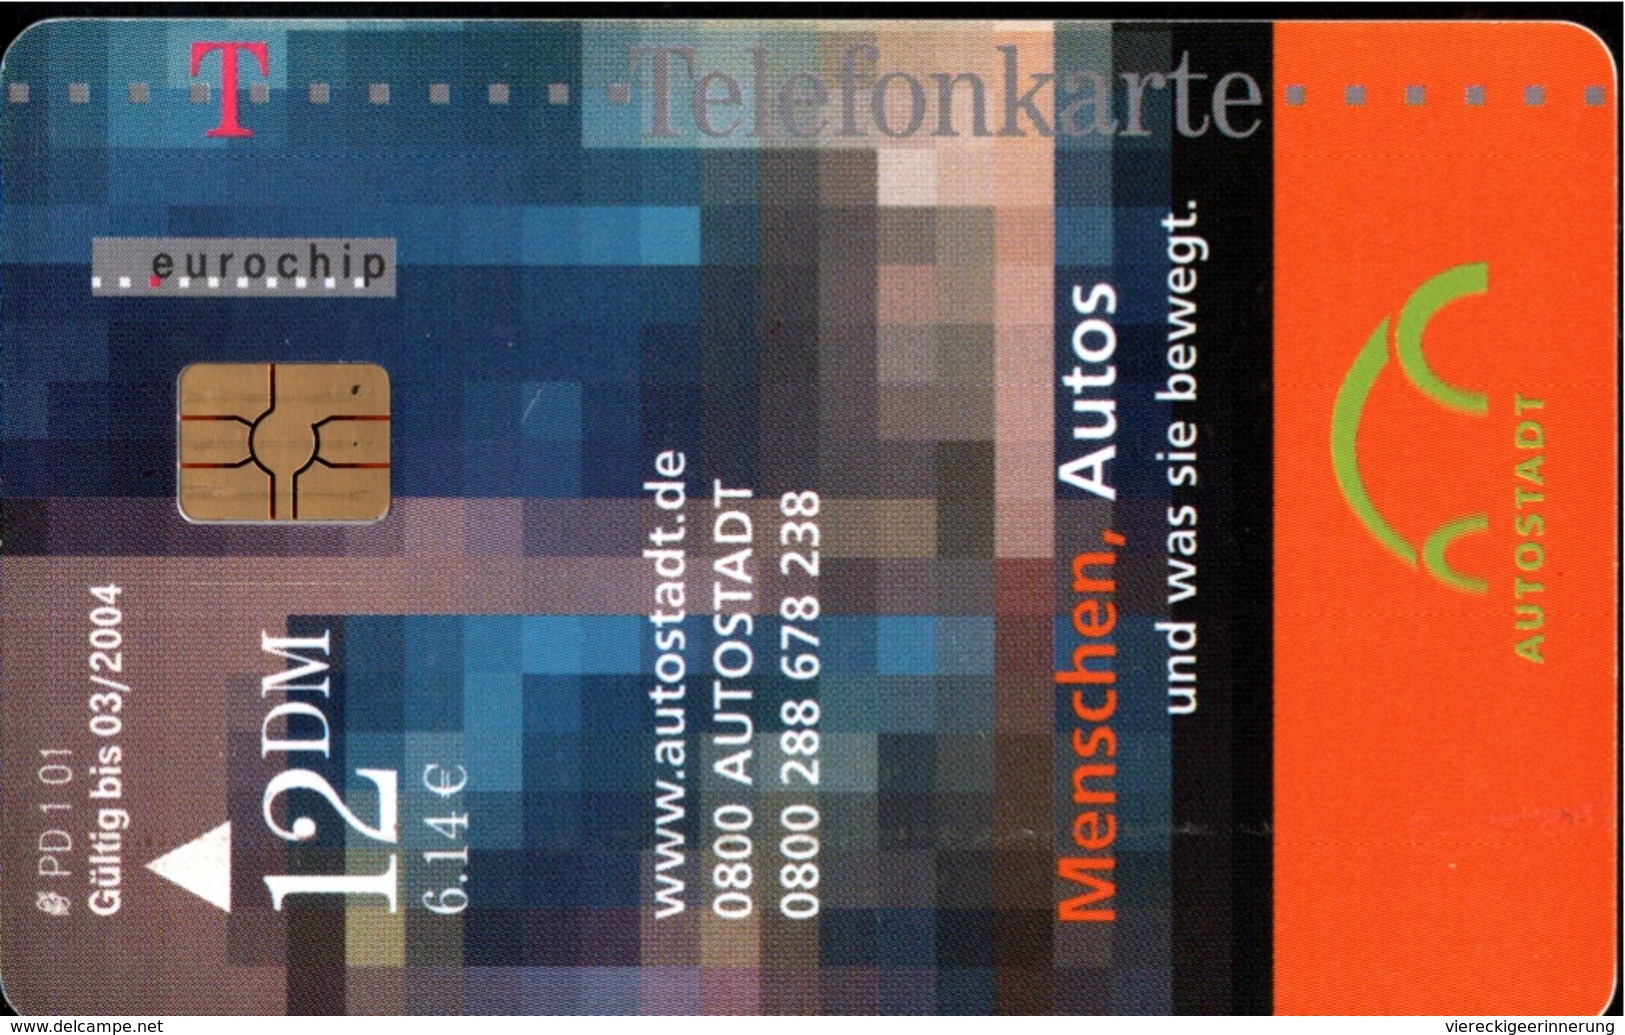 ! Telefonkarte, Telecarte, Phonecard, 2001, PD1, VW Autostadt, Wolfsburg, Germany - P & PD-Series : D. Telekom Till